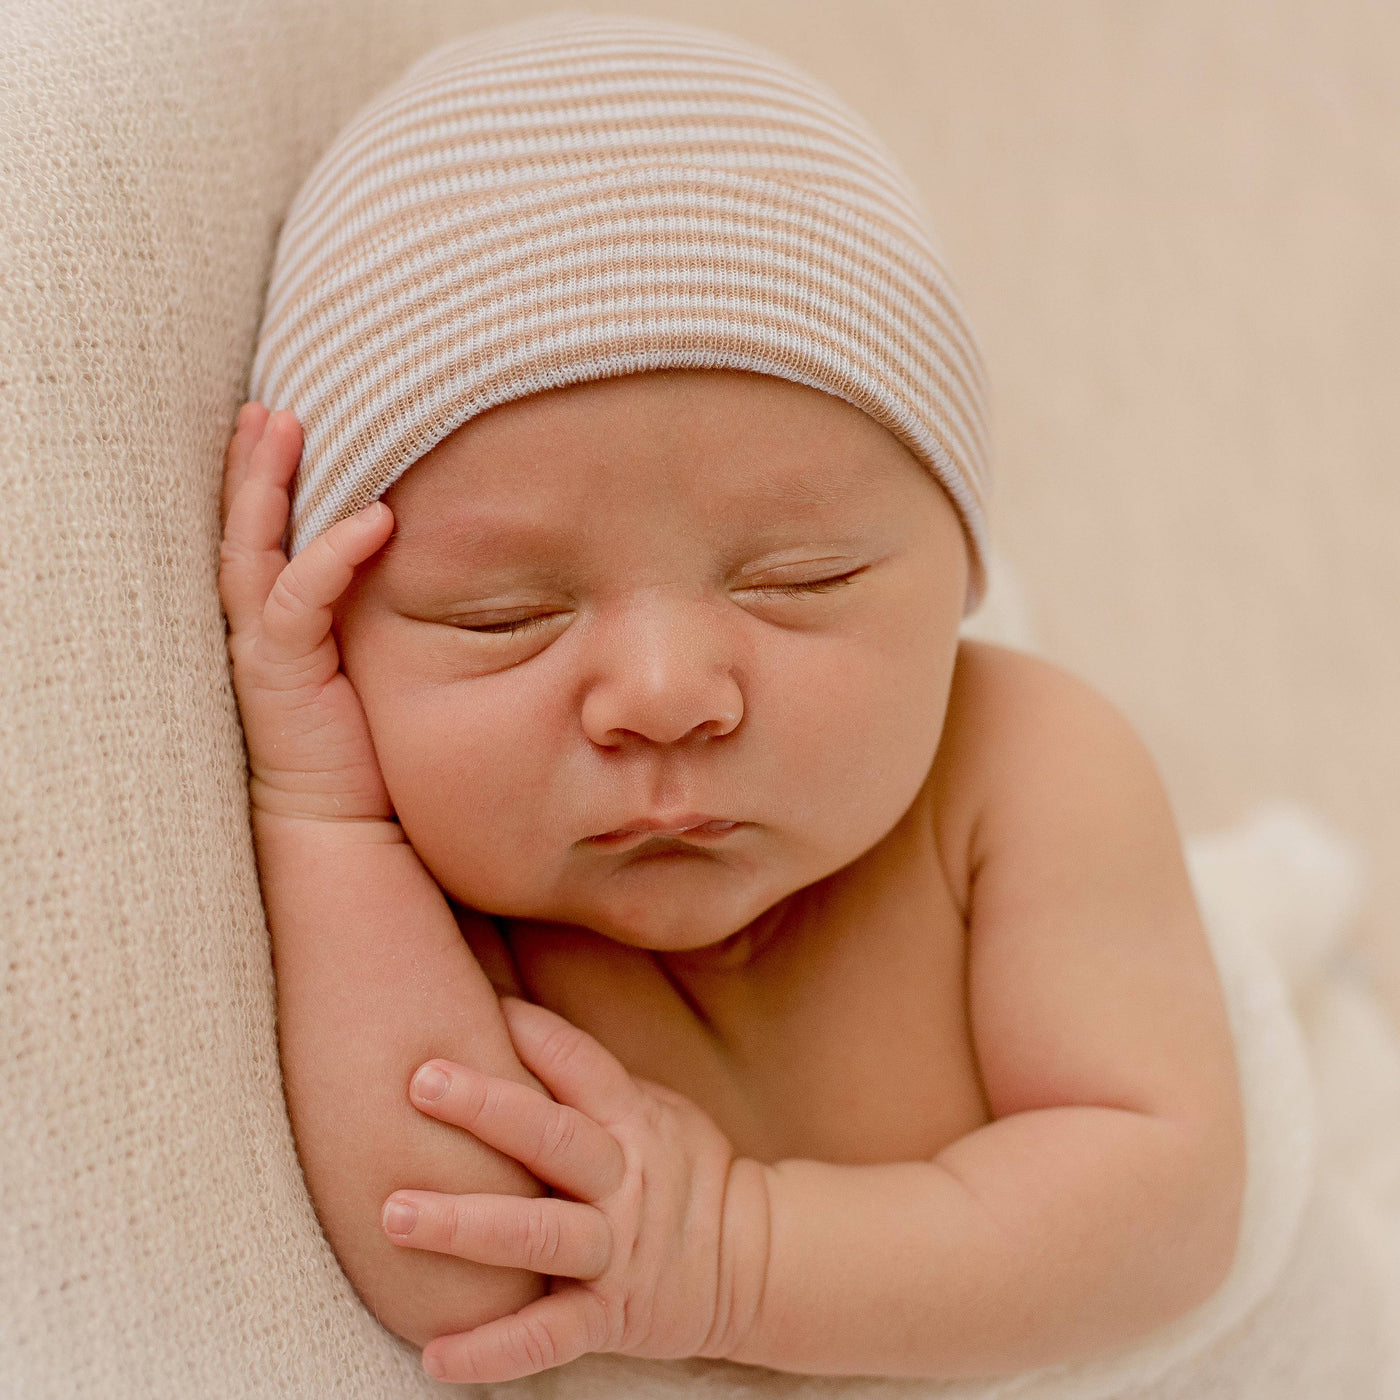 Tan and White Newborn Striped Newborn Hospital Hat